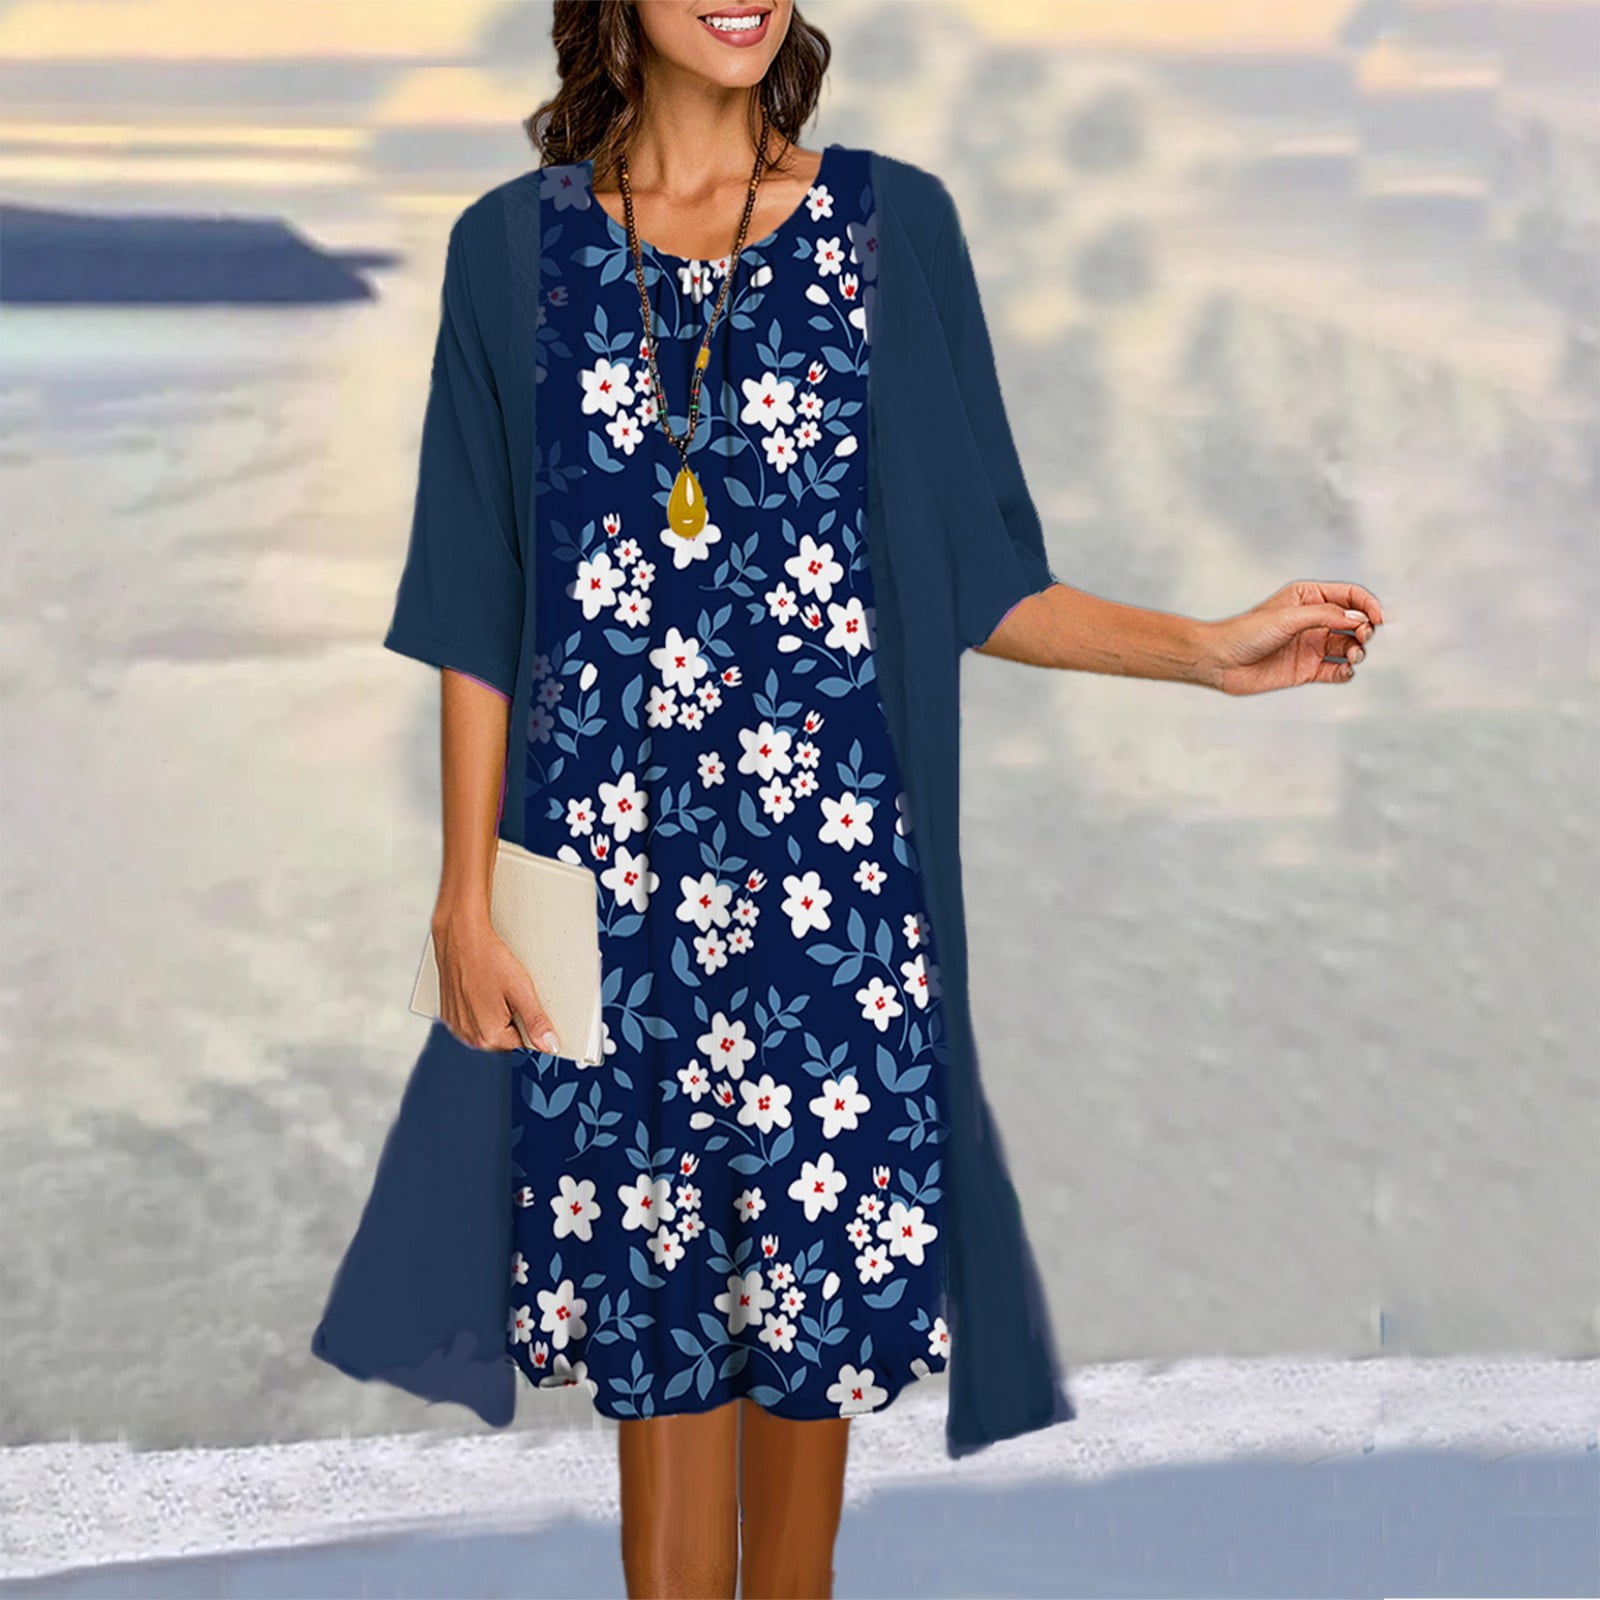 BEEYASO Clearance Summer Dresses for Women 3/4 Sleeve A-Line Knee